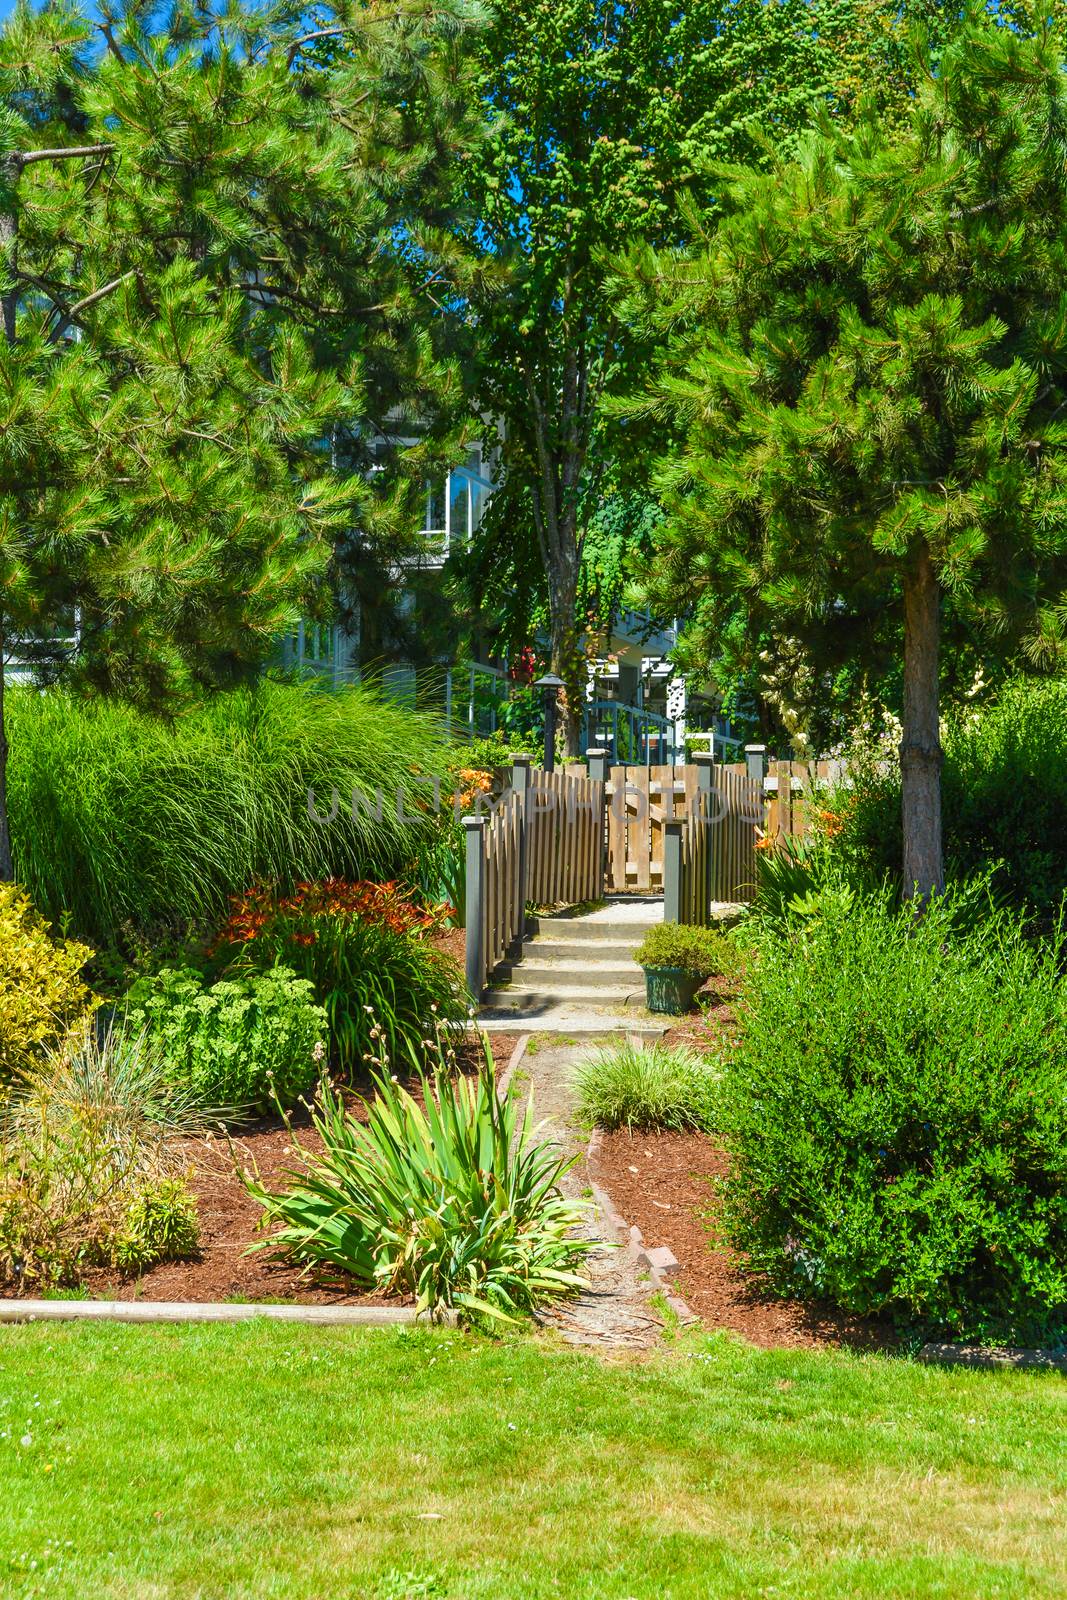 Pathway through recreational summer garden in residential area